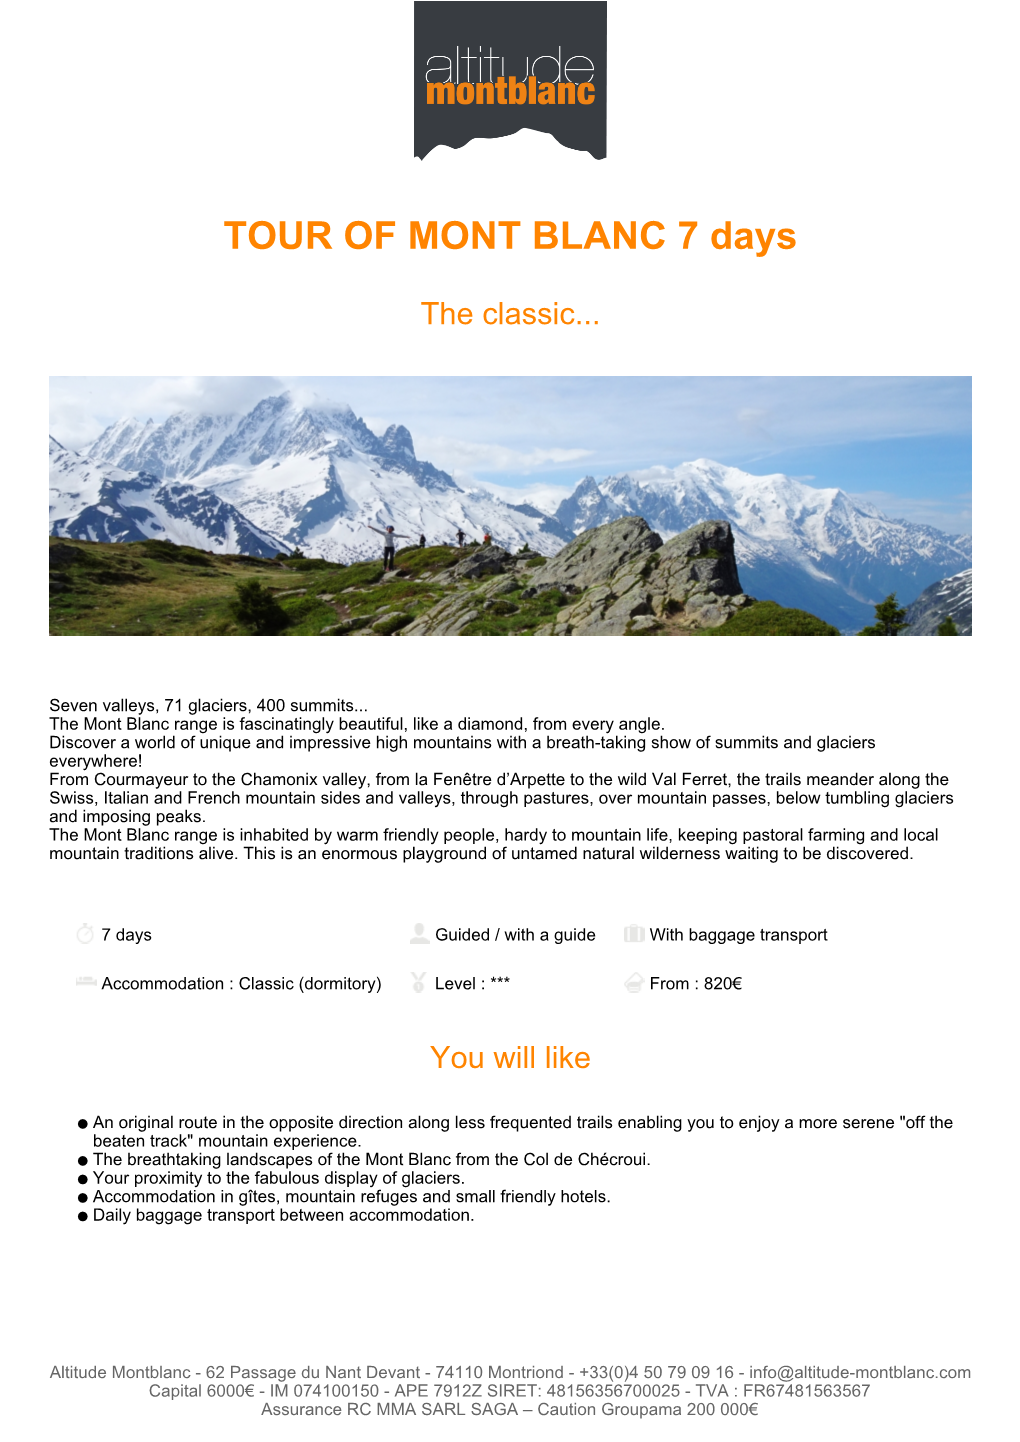 TOUR of MONT BLANC 7 Days